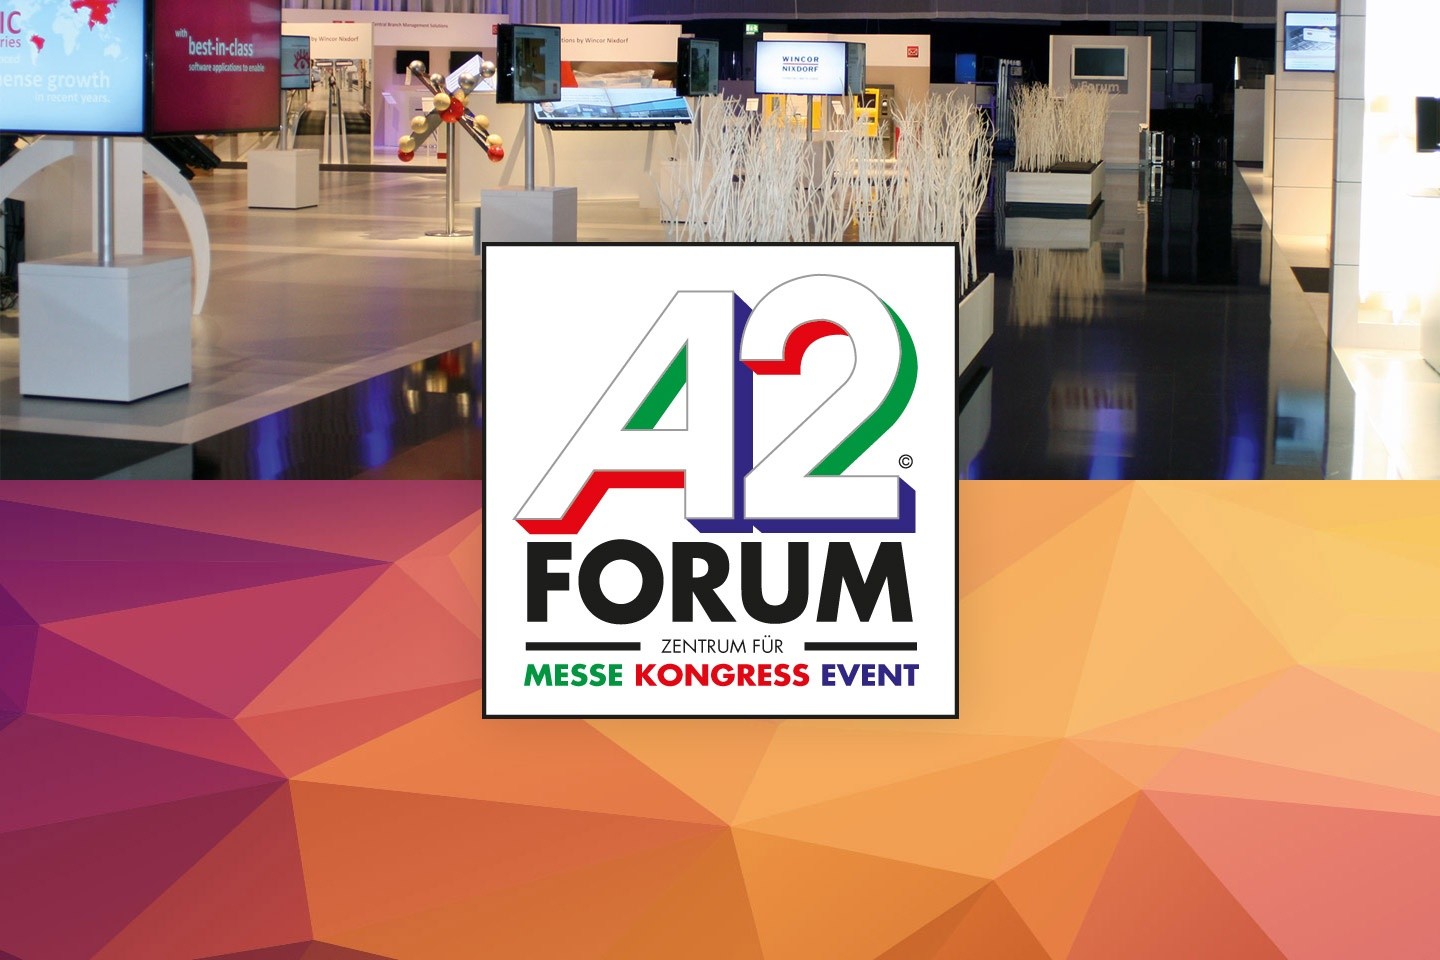 A2 Forum